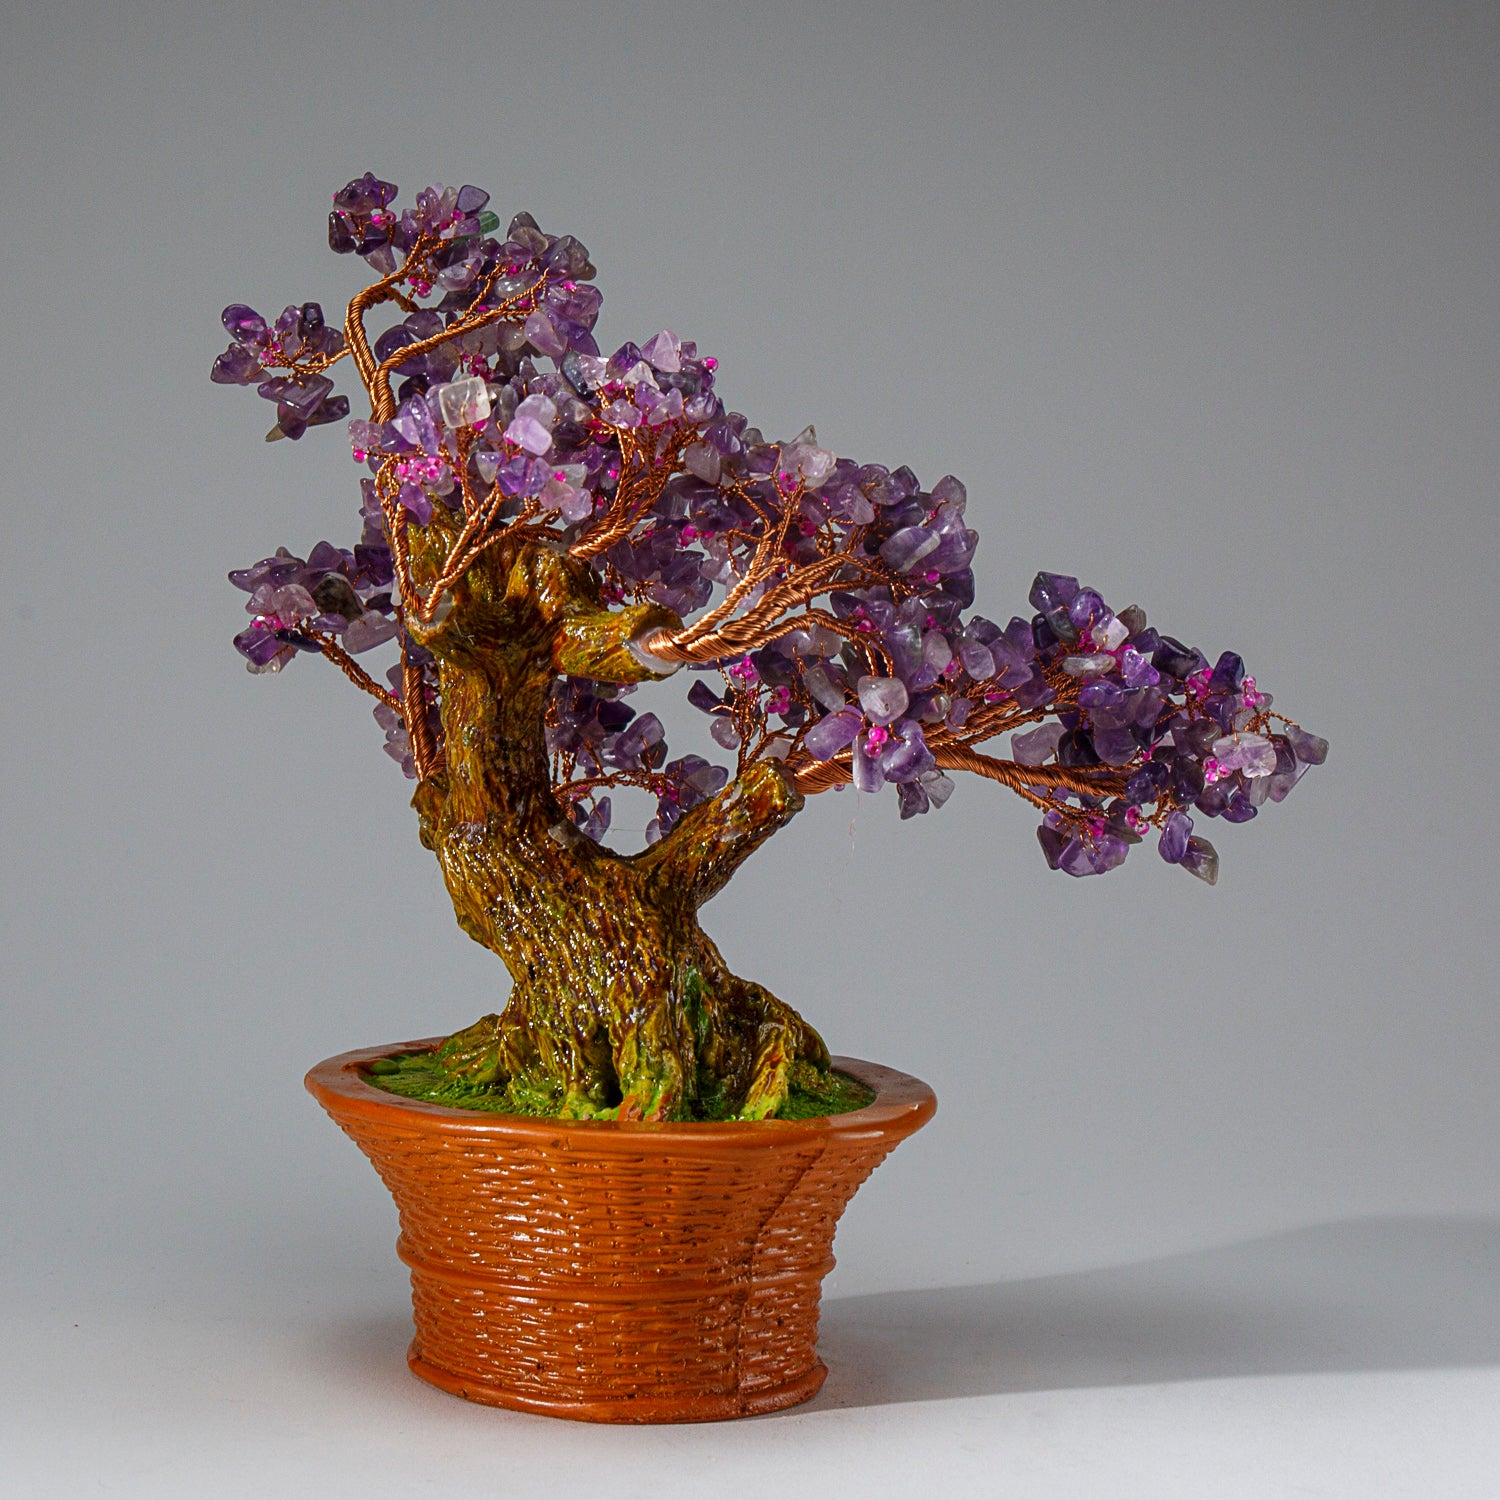 Genuine Amethyst with Rose Quartz Beads Bonsai Tree in Round Basket Ceramic Pot (9” Tall)